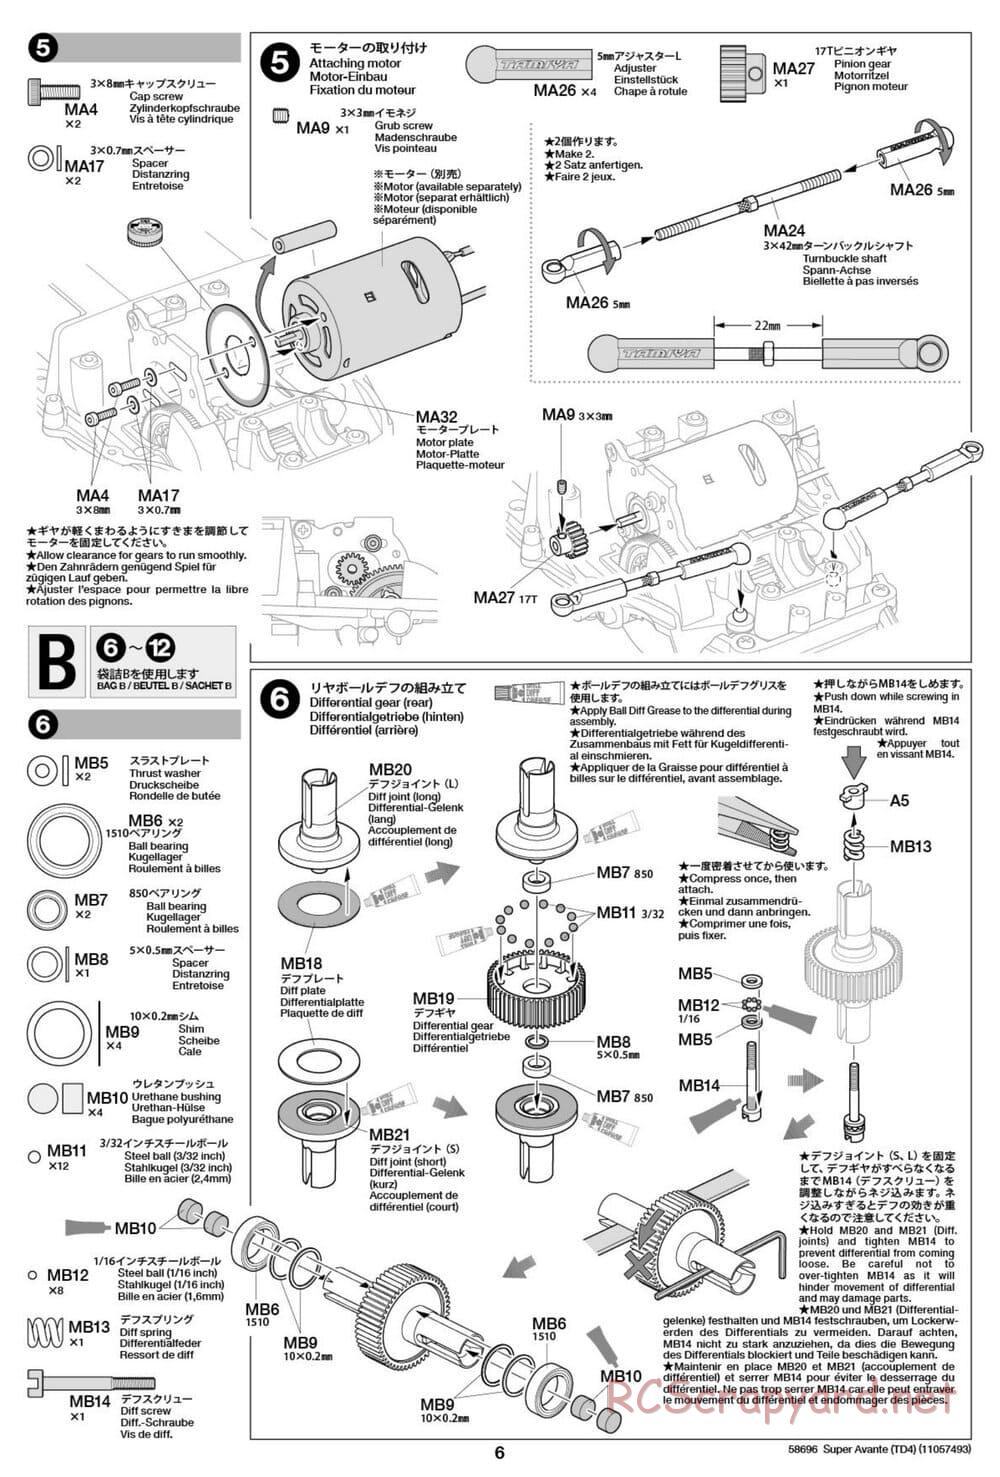 Tamiya - Super Avante - TD4 Chassis - Manual - Page 7